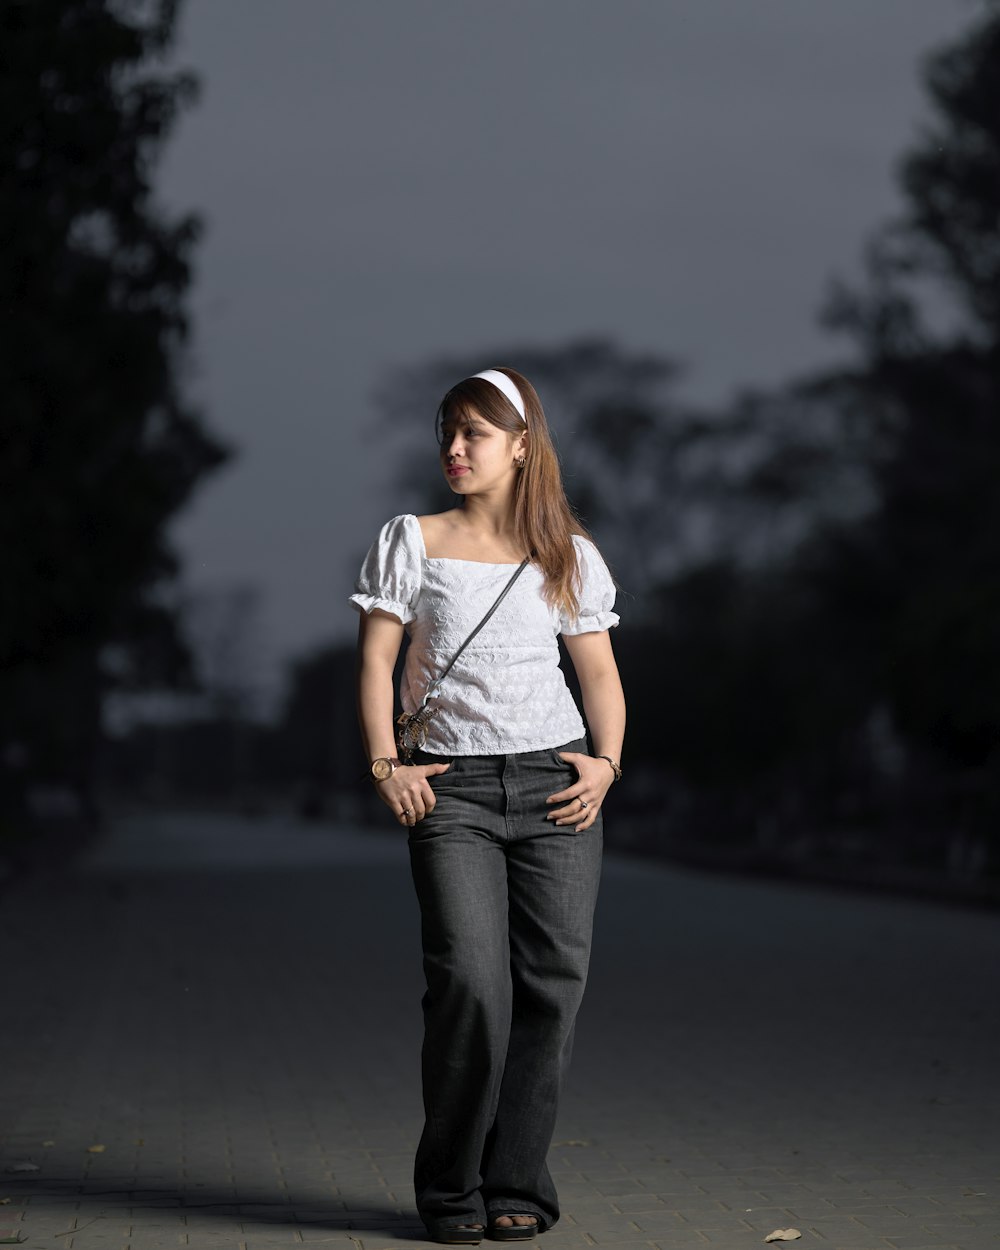 una donna in piedi su un marciapiede con le mani sui fianchi